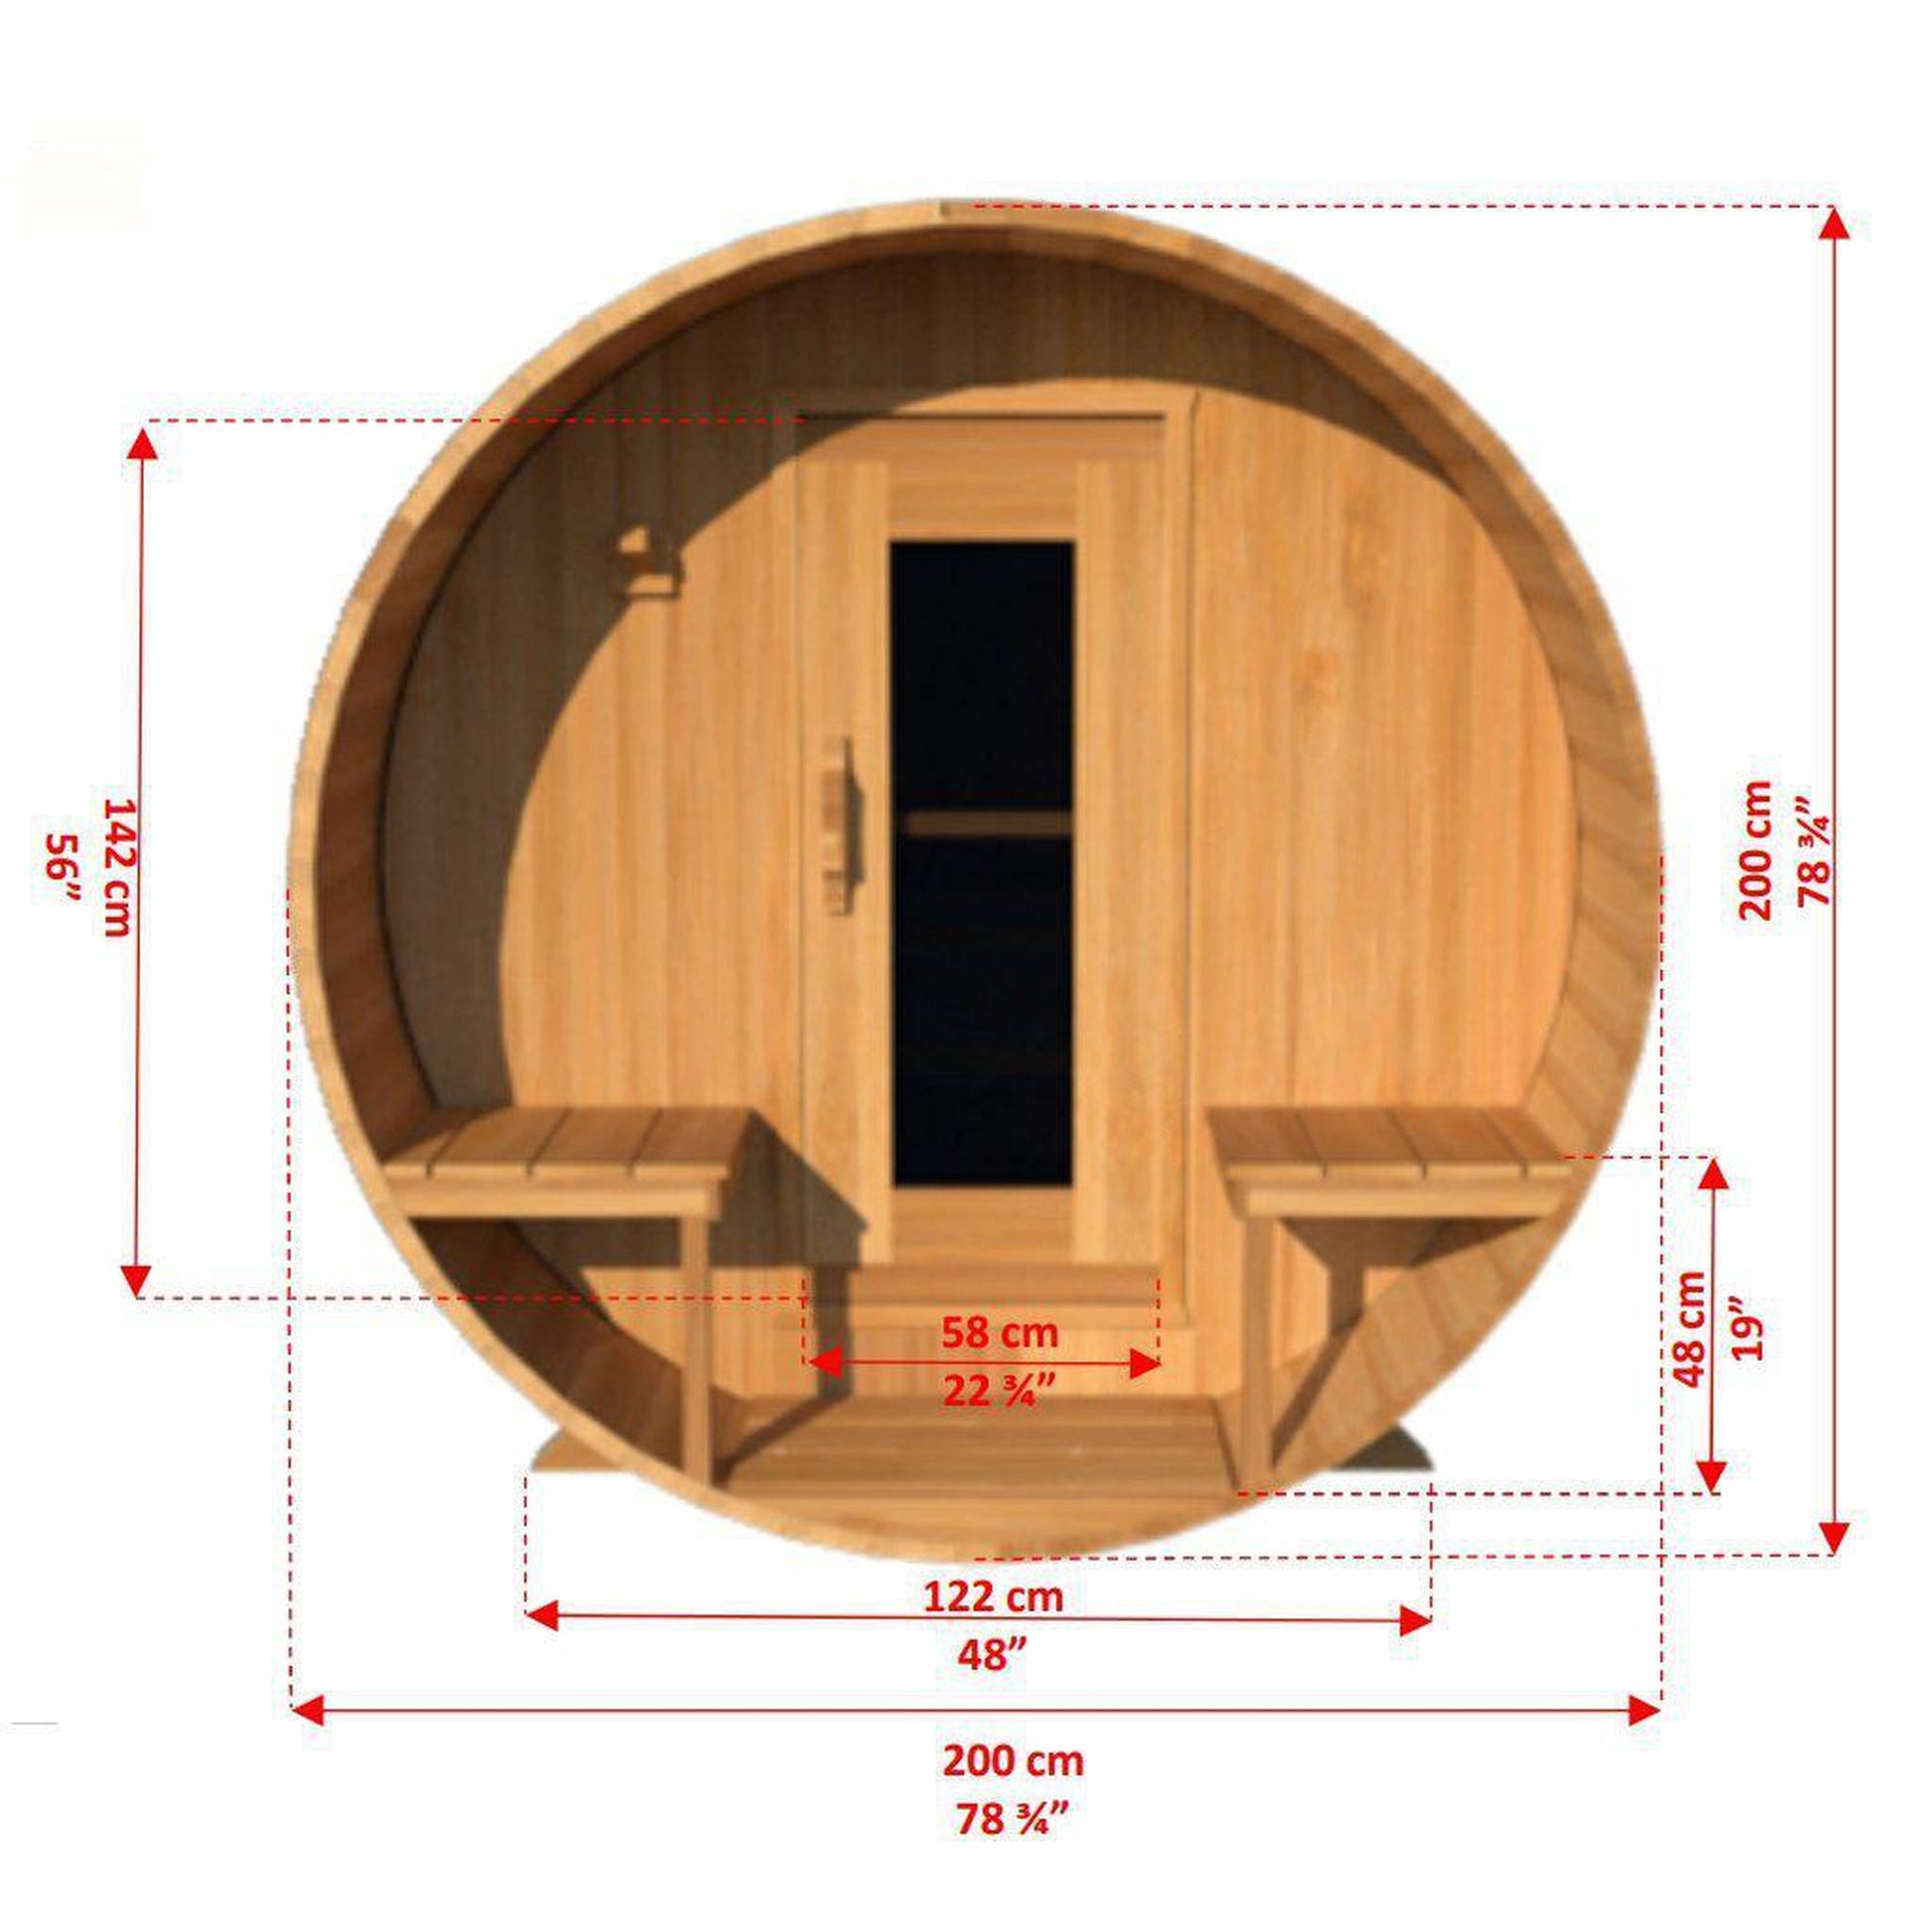 Dundalk LeisureCraft Canadian Timber Serenity 2-4 Person White Cedar Outdoor Barrel Sauna